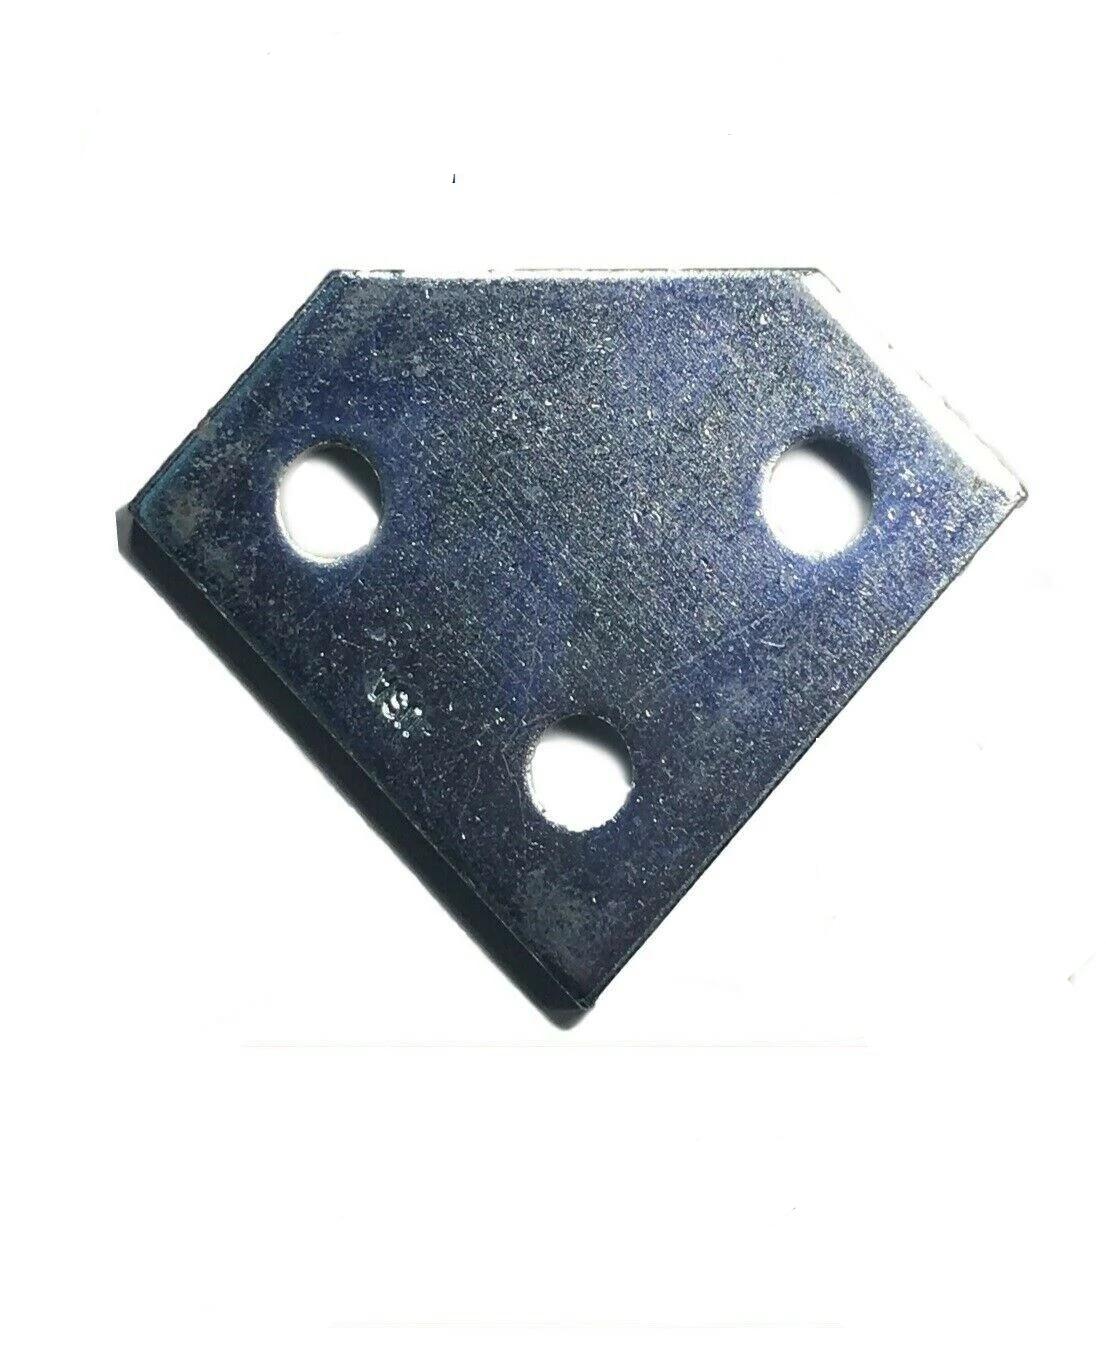 (#4622) P1334 3-Hole Flat Corner Splice Plate FittIng for Unistrut Channel